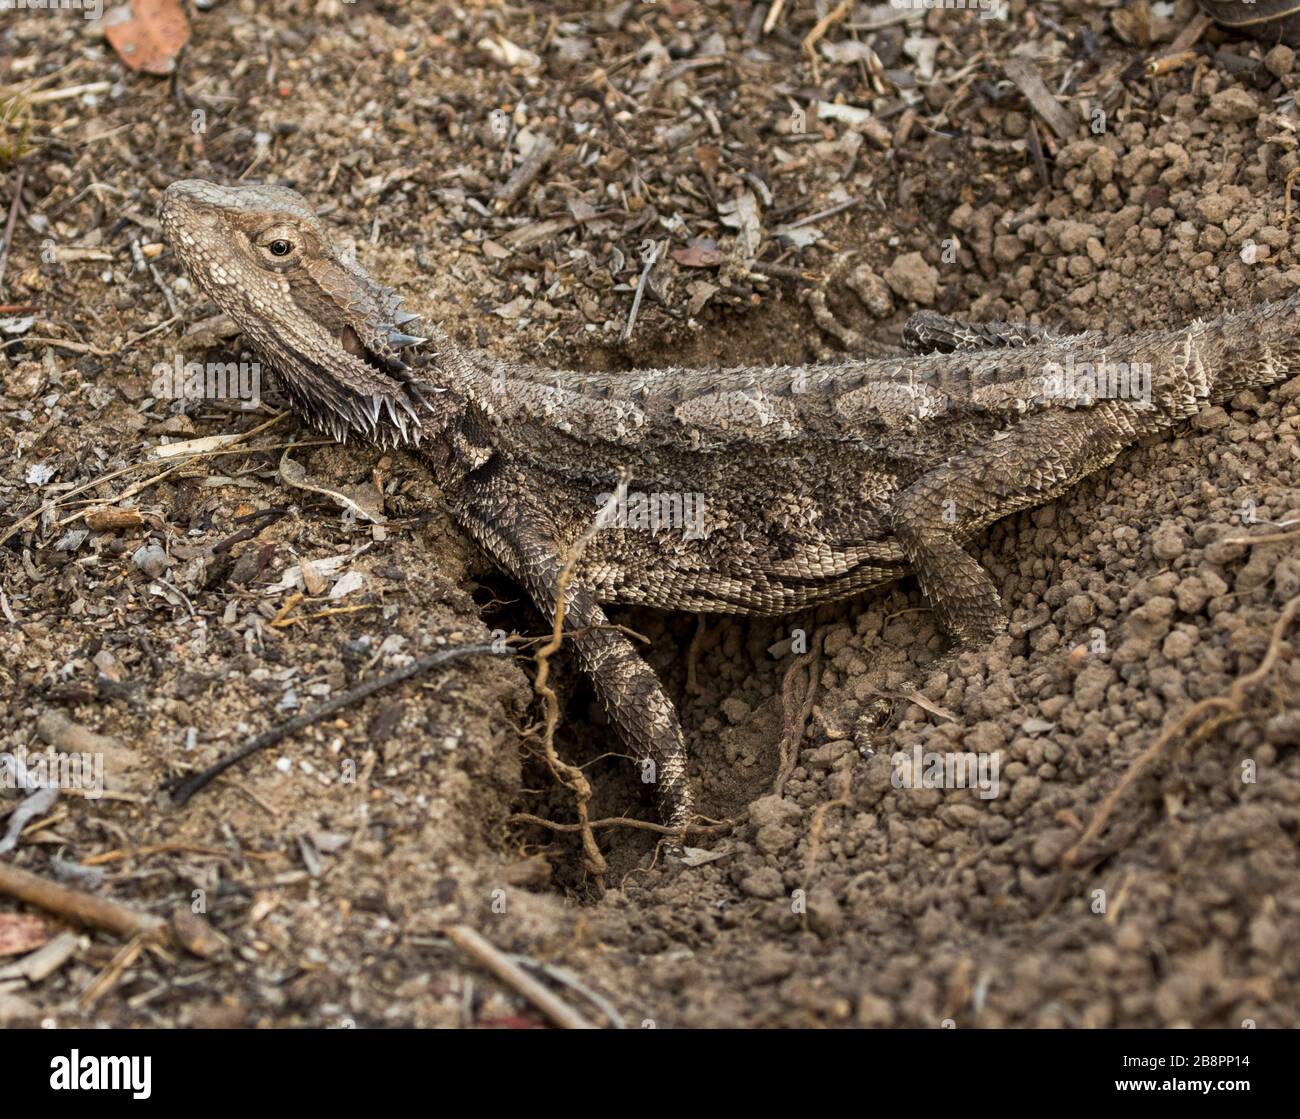 Female Australian bearded dragon lizard, Pogona barbata, digging a hole in which to lay its eggs in an urban garden Stock Photo